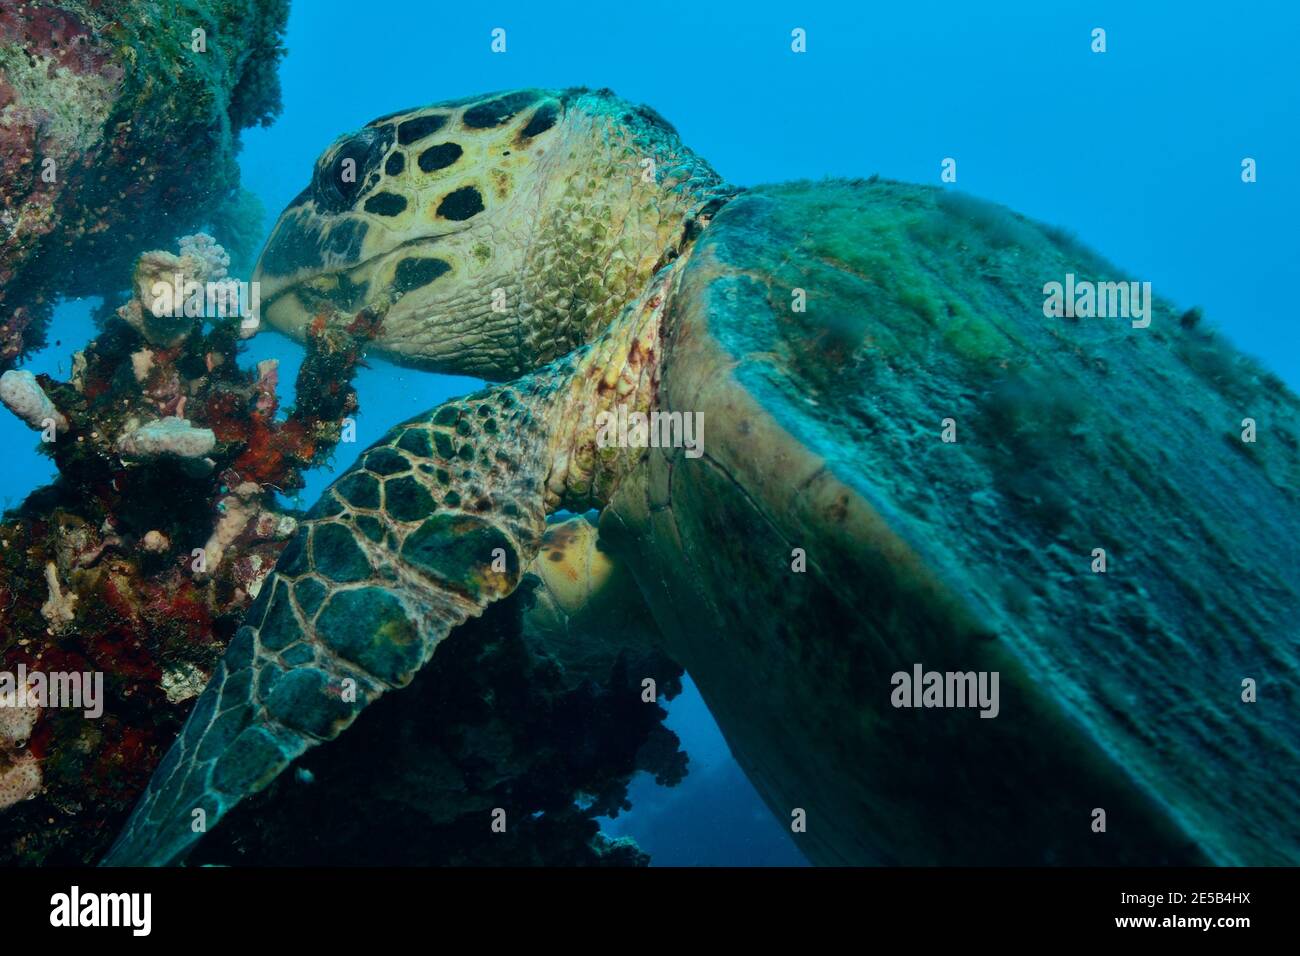 Eretmochelys imbricata, hawksbill sea turtle, Echte Karettschildkröte, feeding, fressend, Coraya Beach, Rotes Meer, Ägypten, Red Sea, Egypt Stock Photo